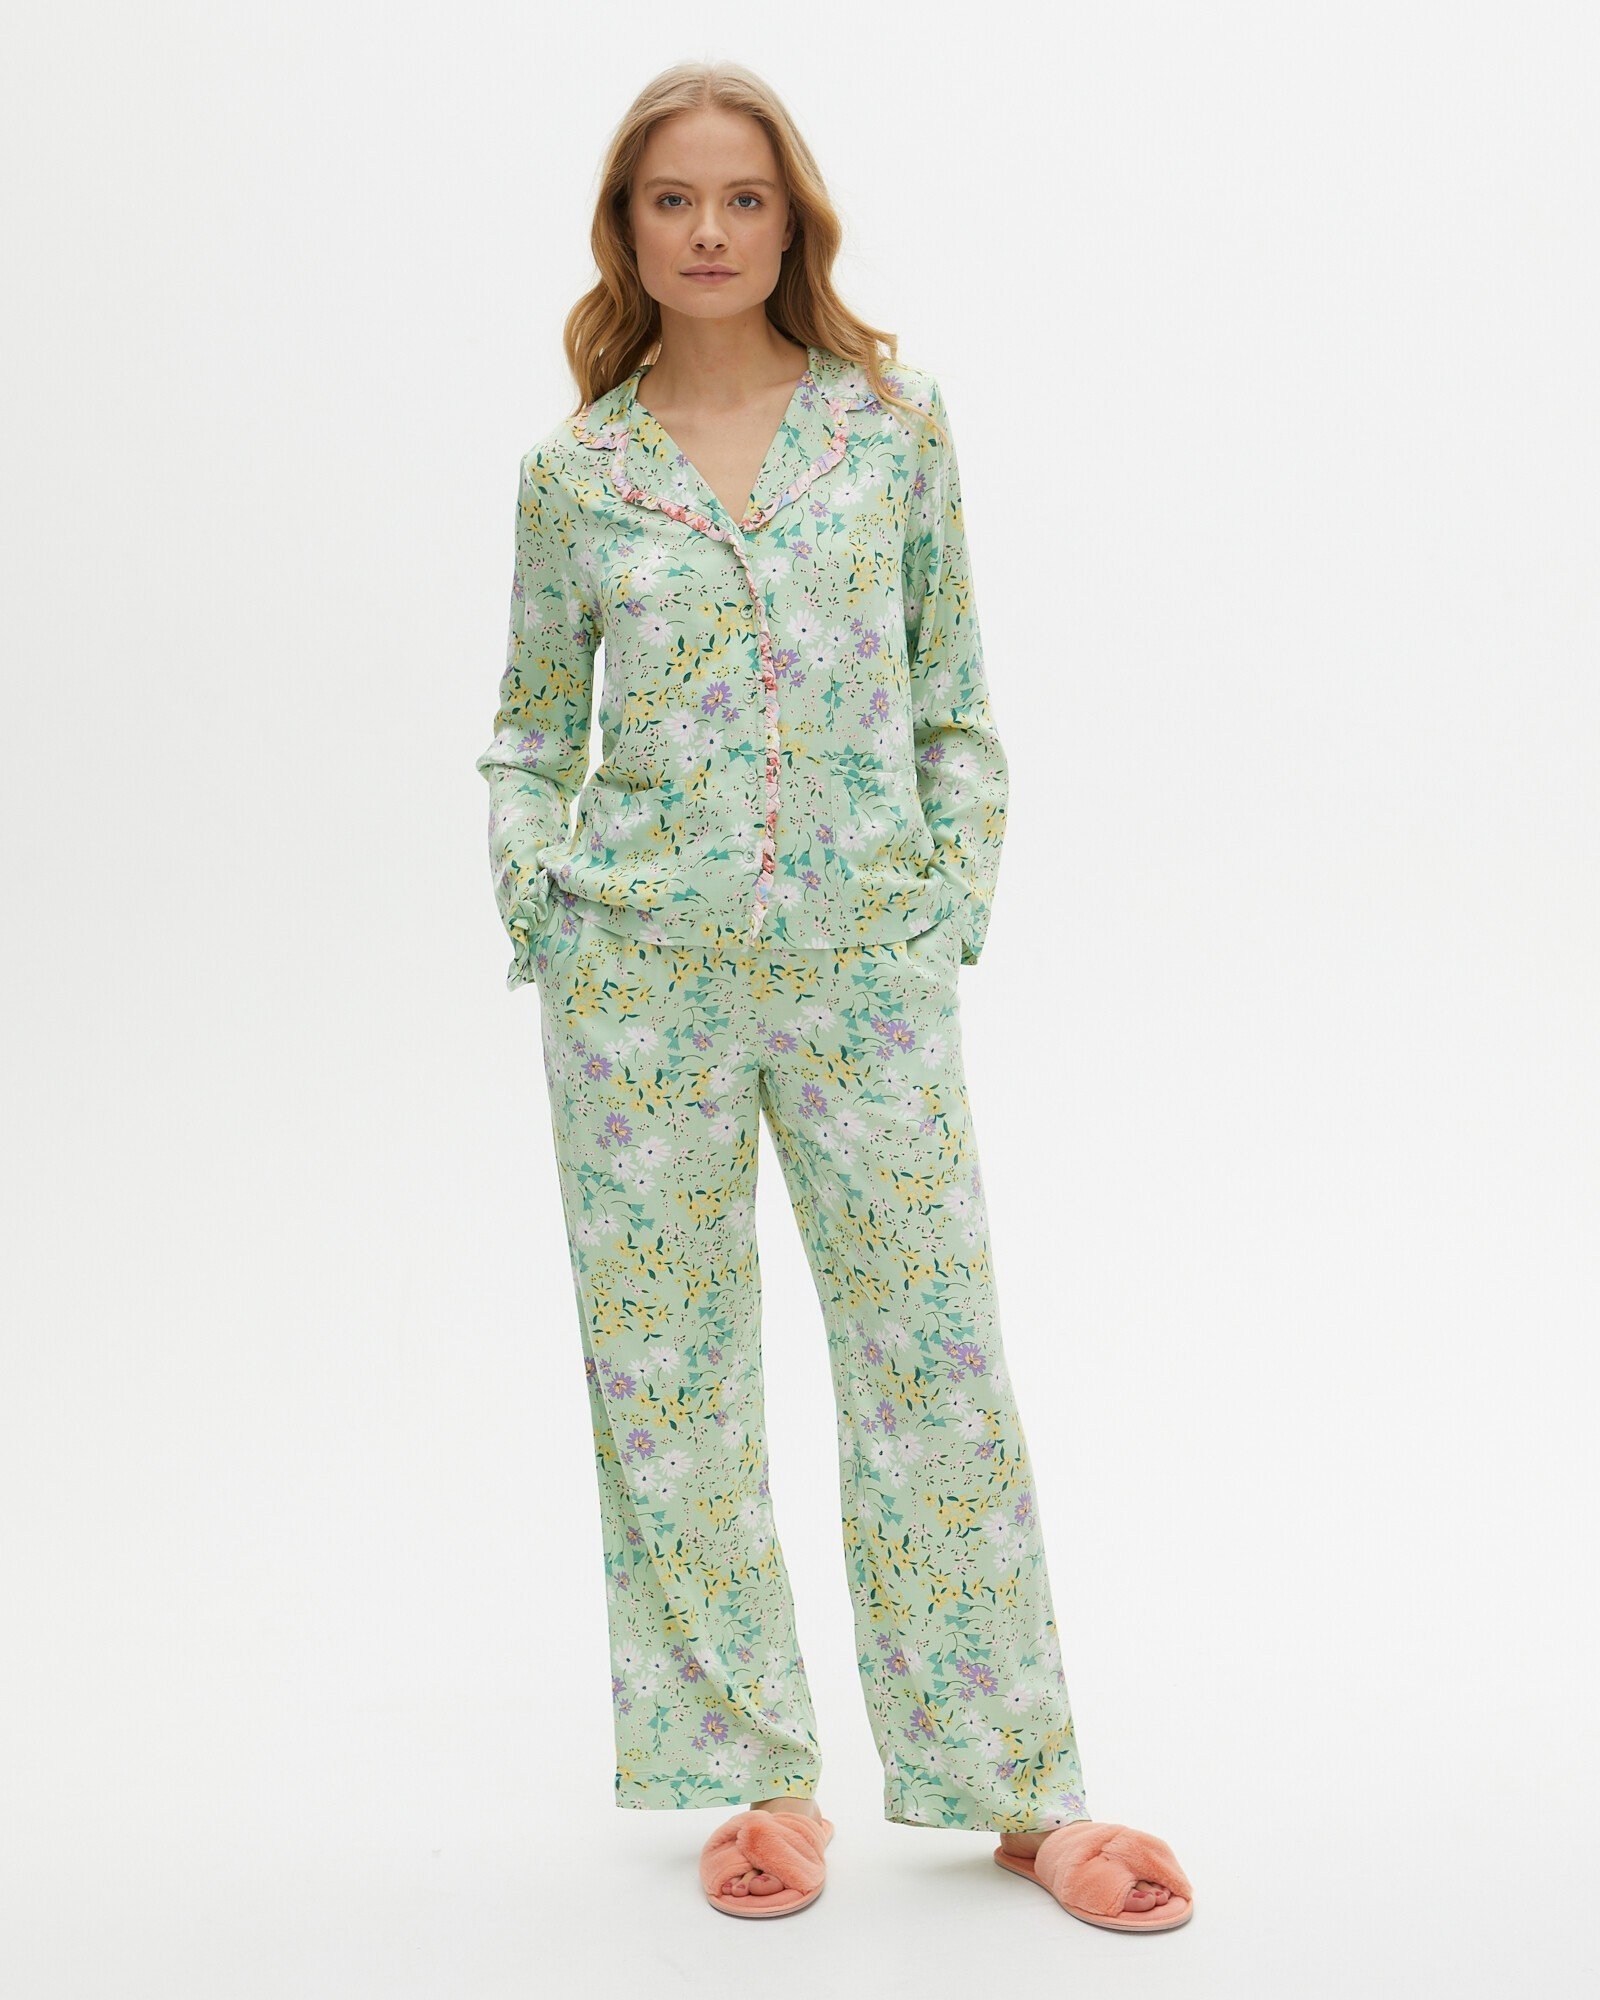 9.OLIVER BONAS Field Floral Print Green Shirt &amp; Trousers Pyjama Set €84, 